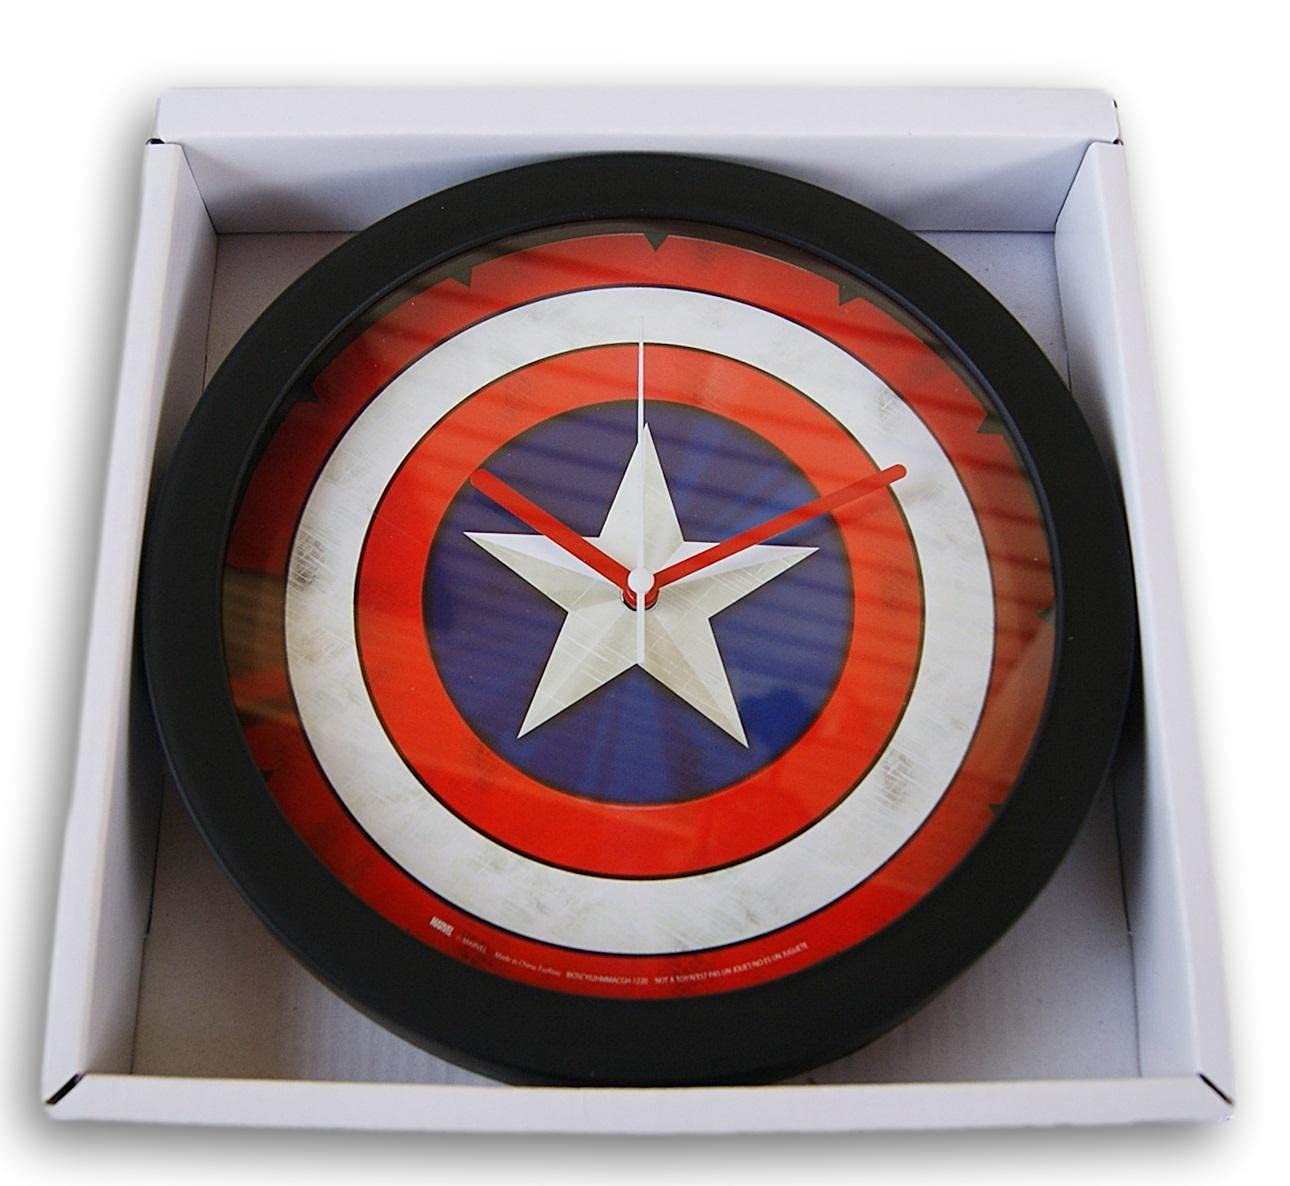 Summer Decor Captain America Themed Analog Wall Clock - 9.5 Inch Diameter